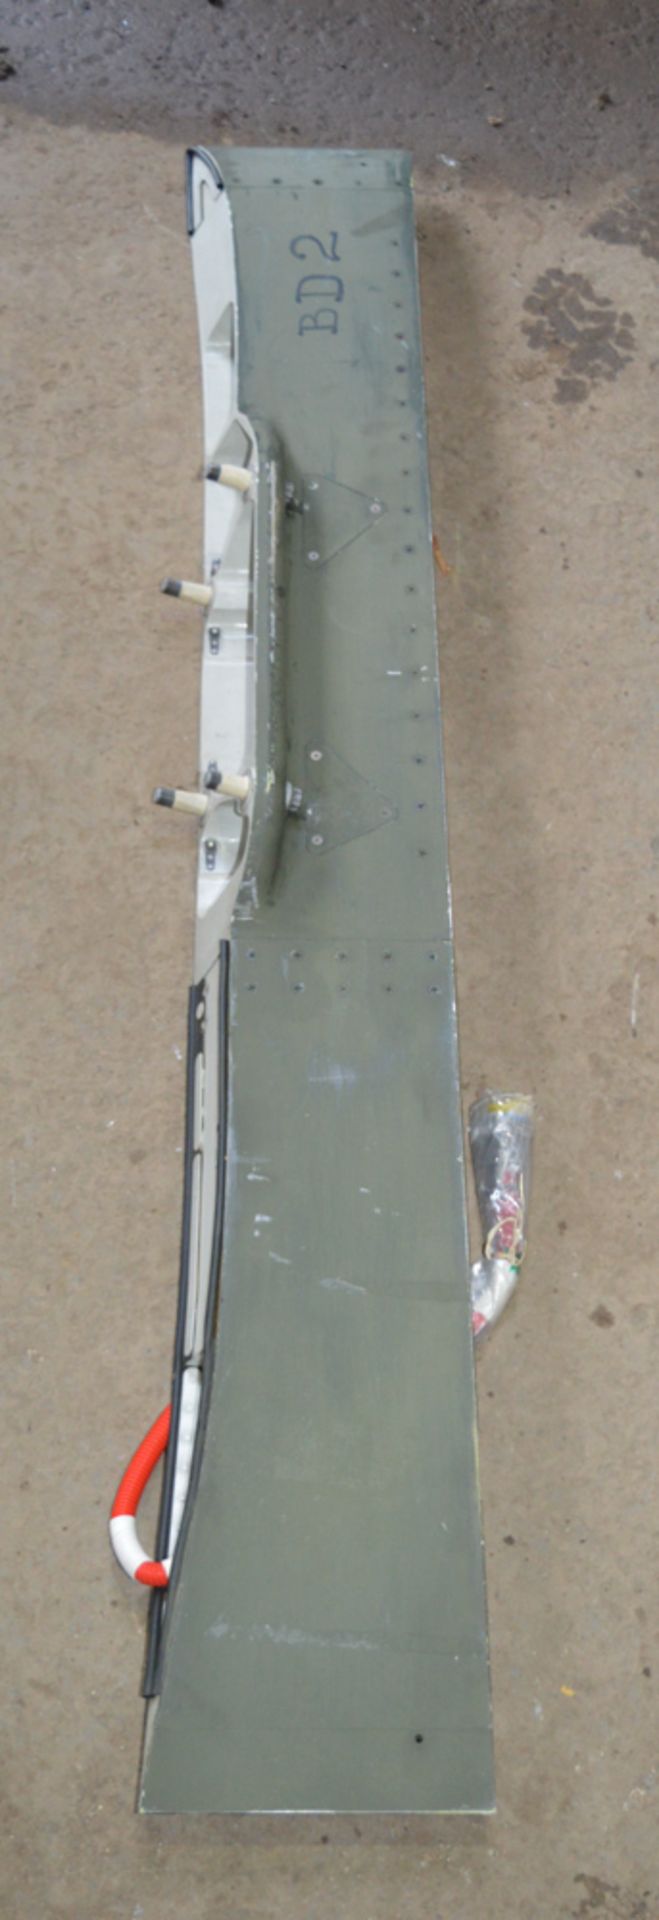 Tornado adaptor sidewinder Approximately 1500mm x 220mm - Image 2 of 2